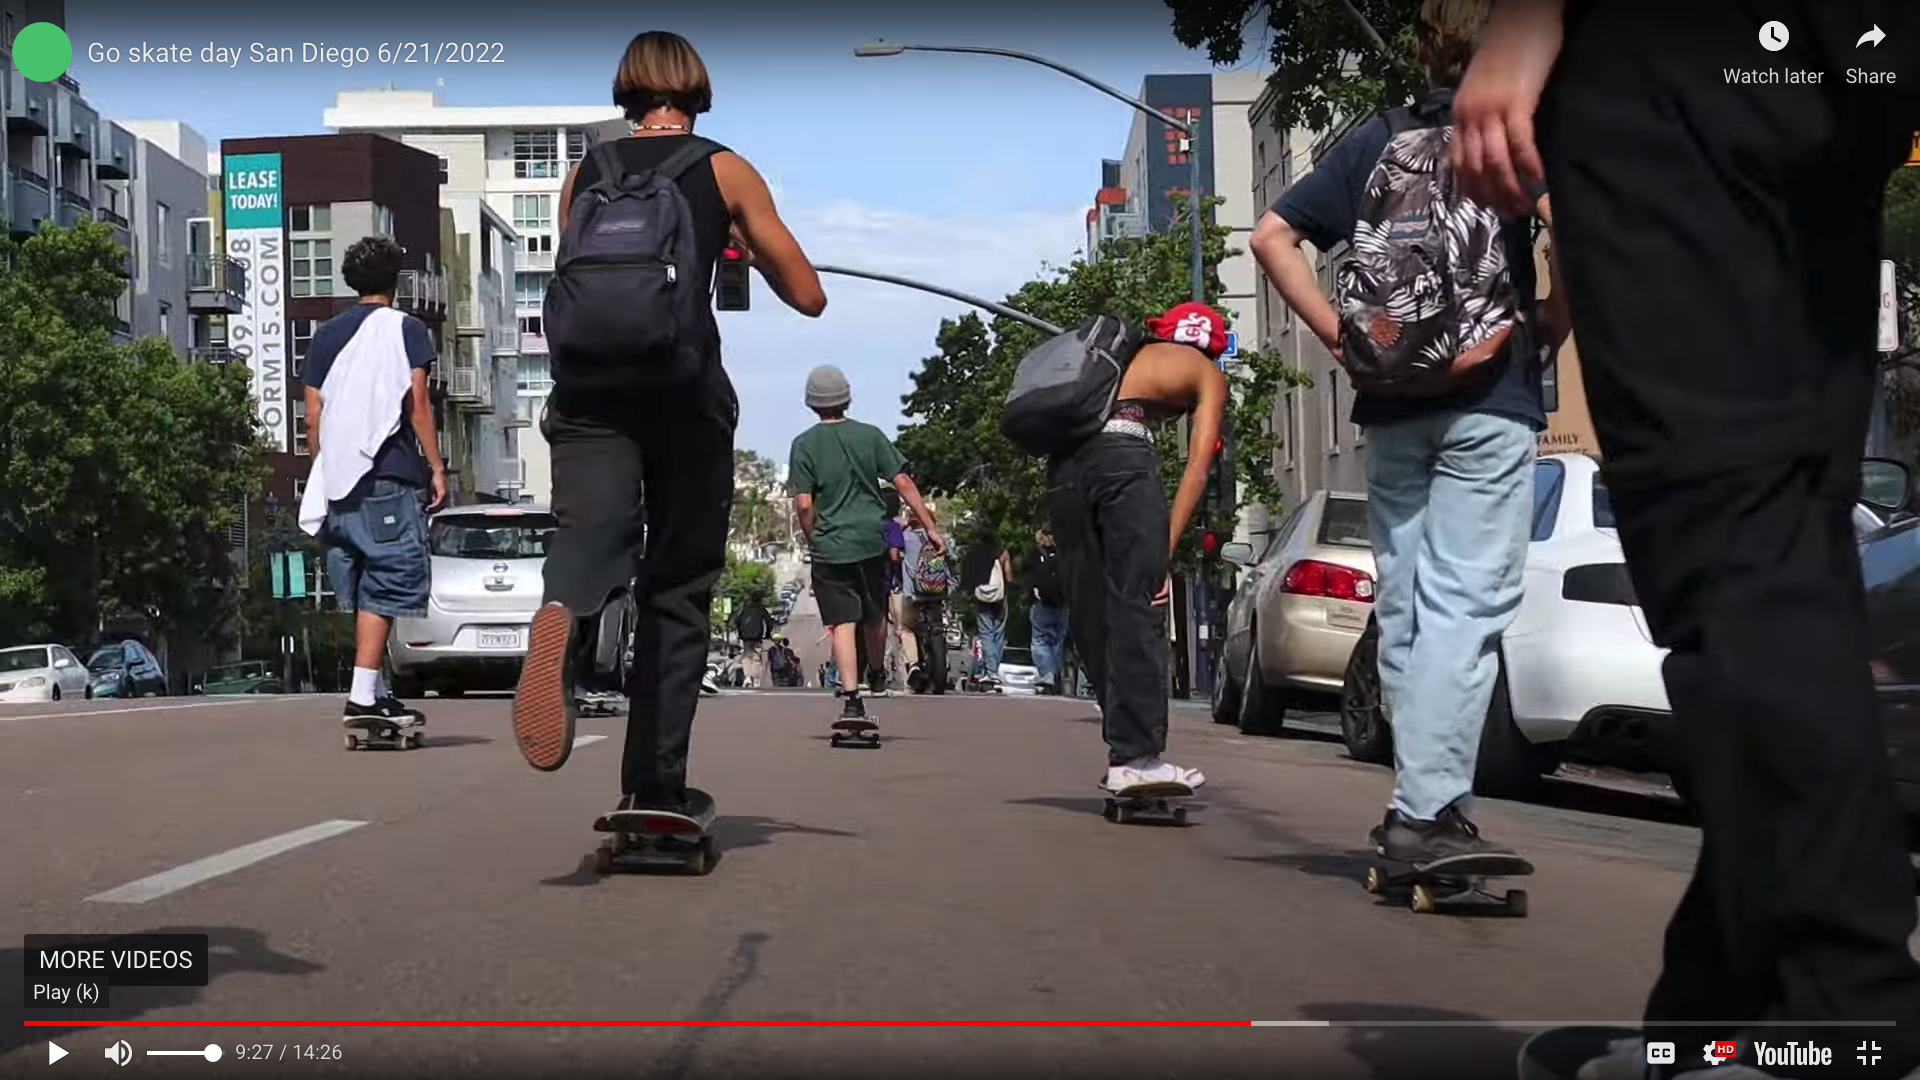 Skateboarders annoy, inspire downtown San Diego